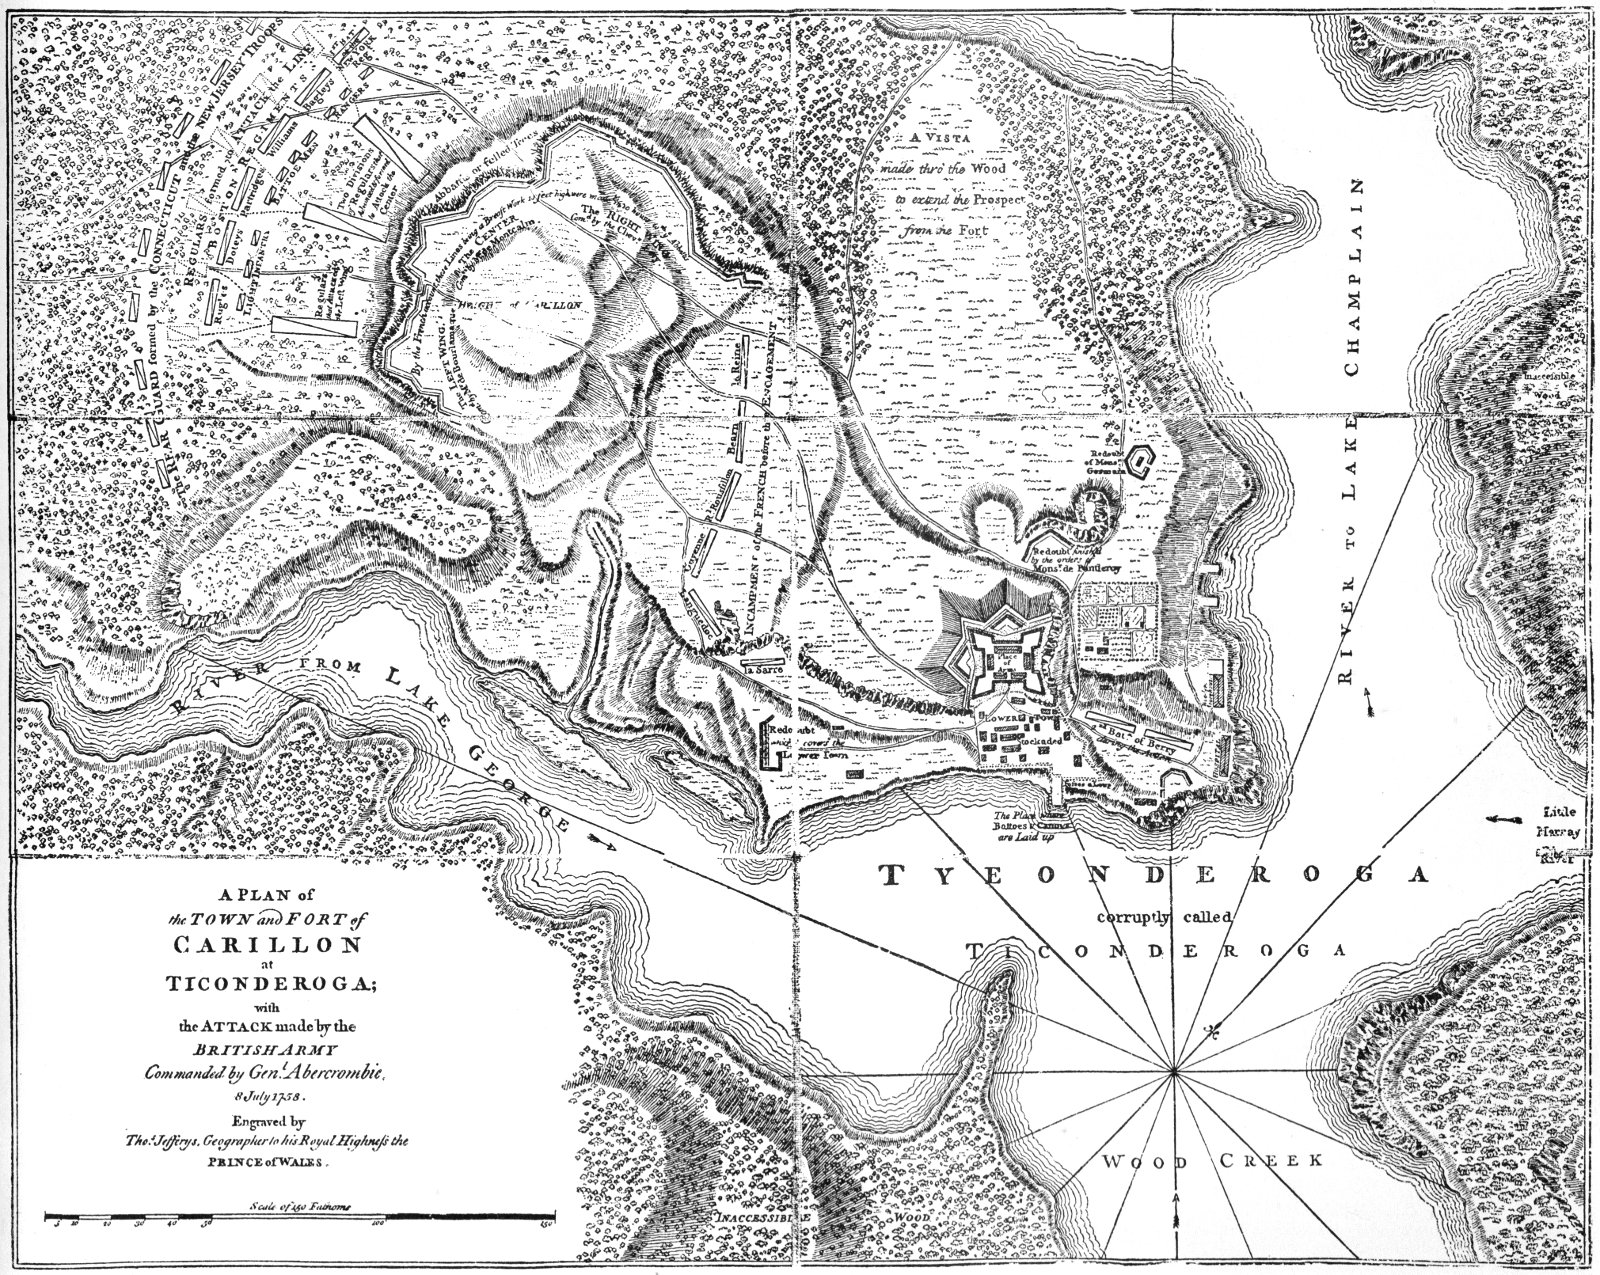 Plan of Fort Ticonderoga, New York, 1758